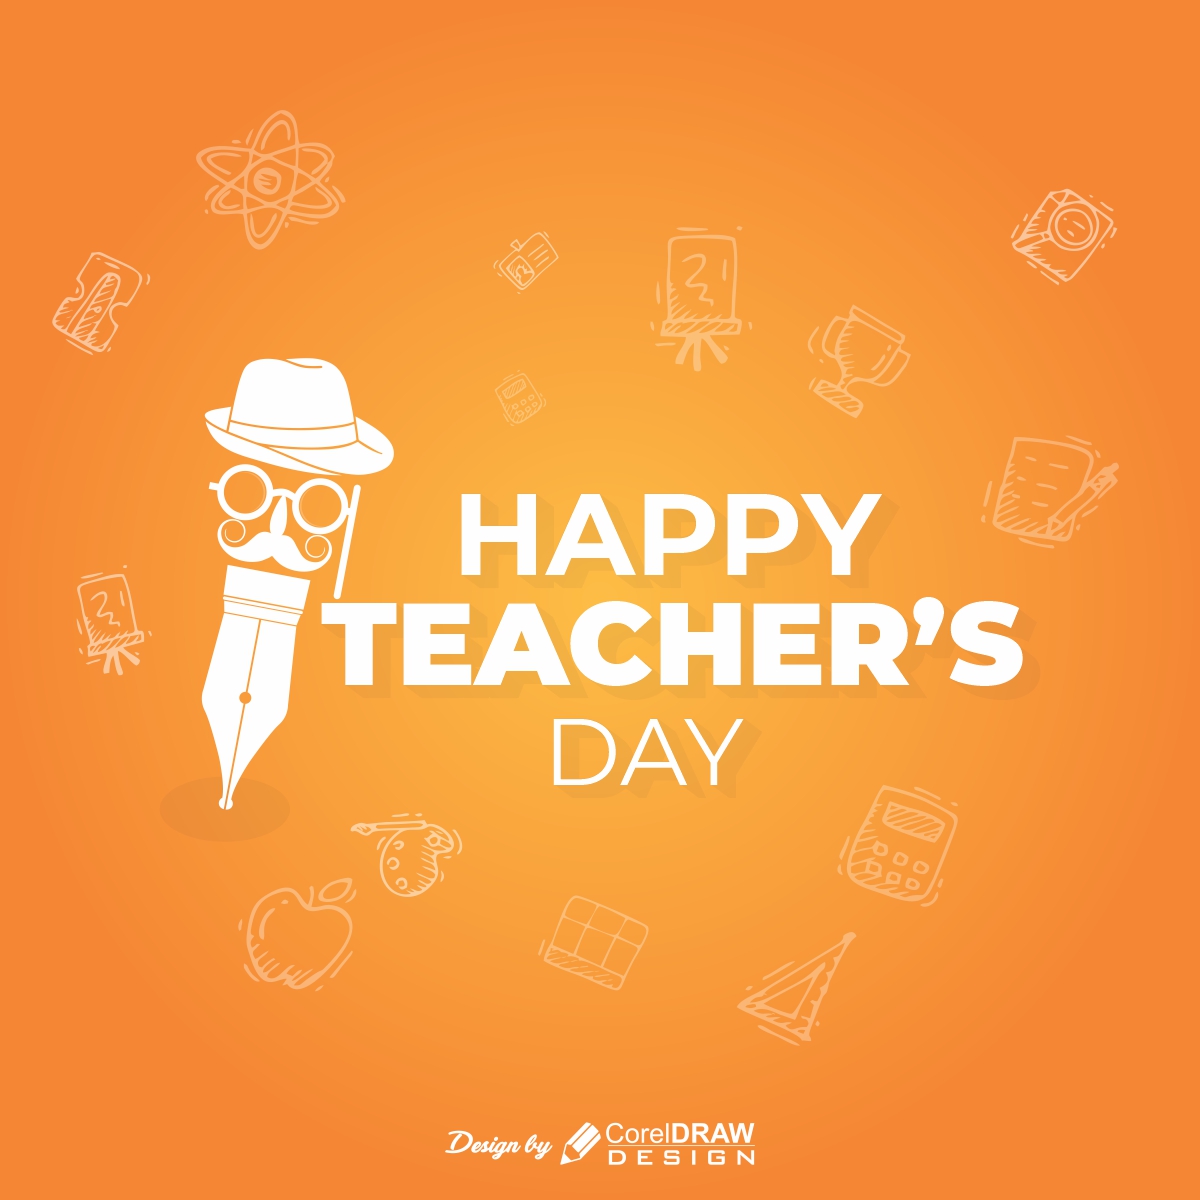 Teachers Day Wish Greetings